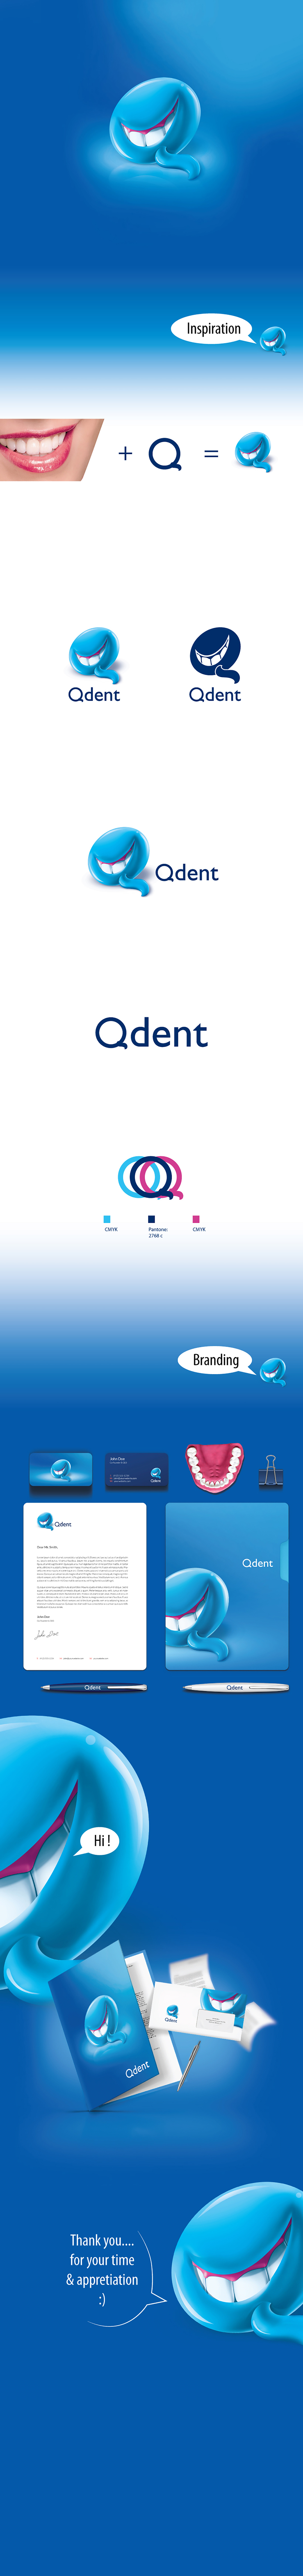 Logo Design Corporate Identity stationary chatacter cartoon Qdent Dentist logo smile icon logo